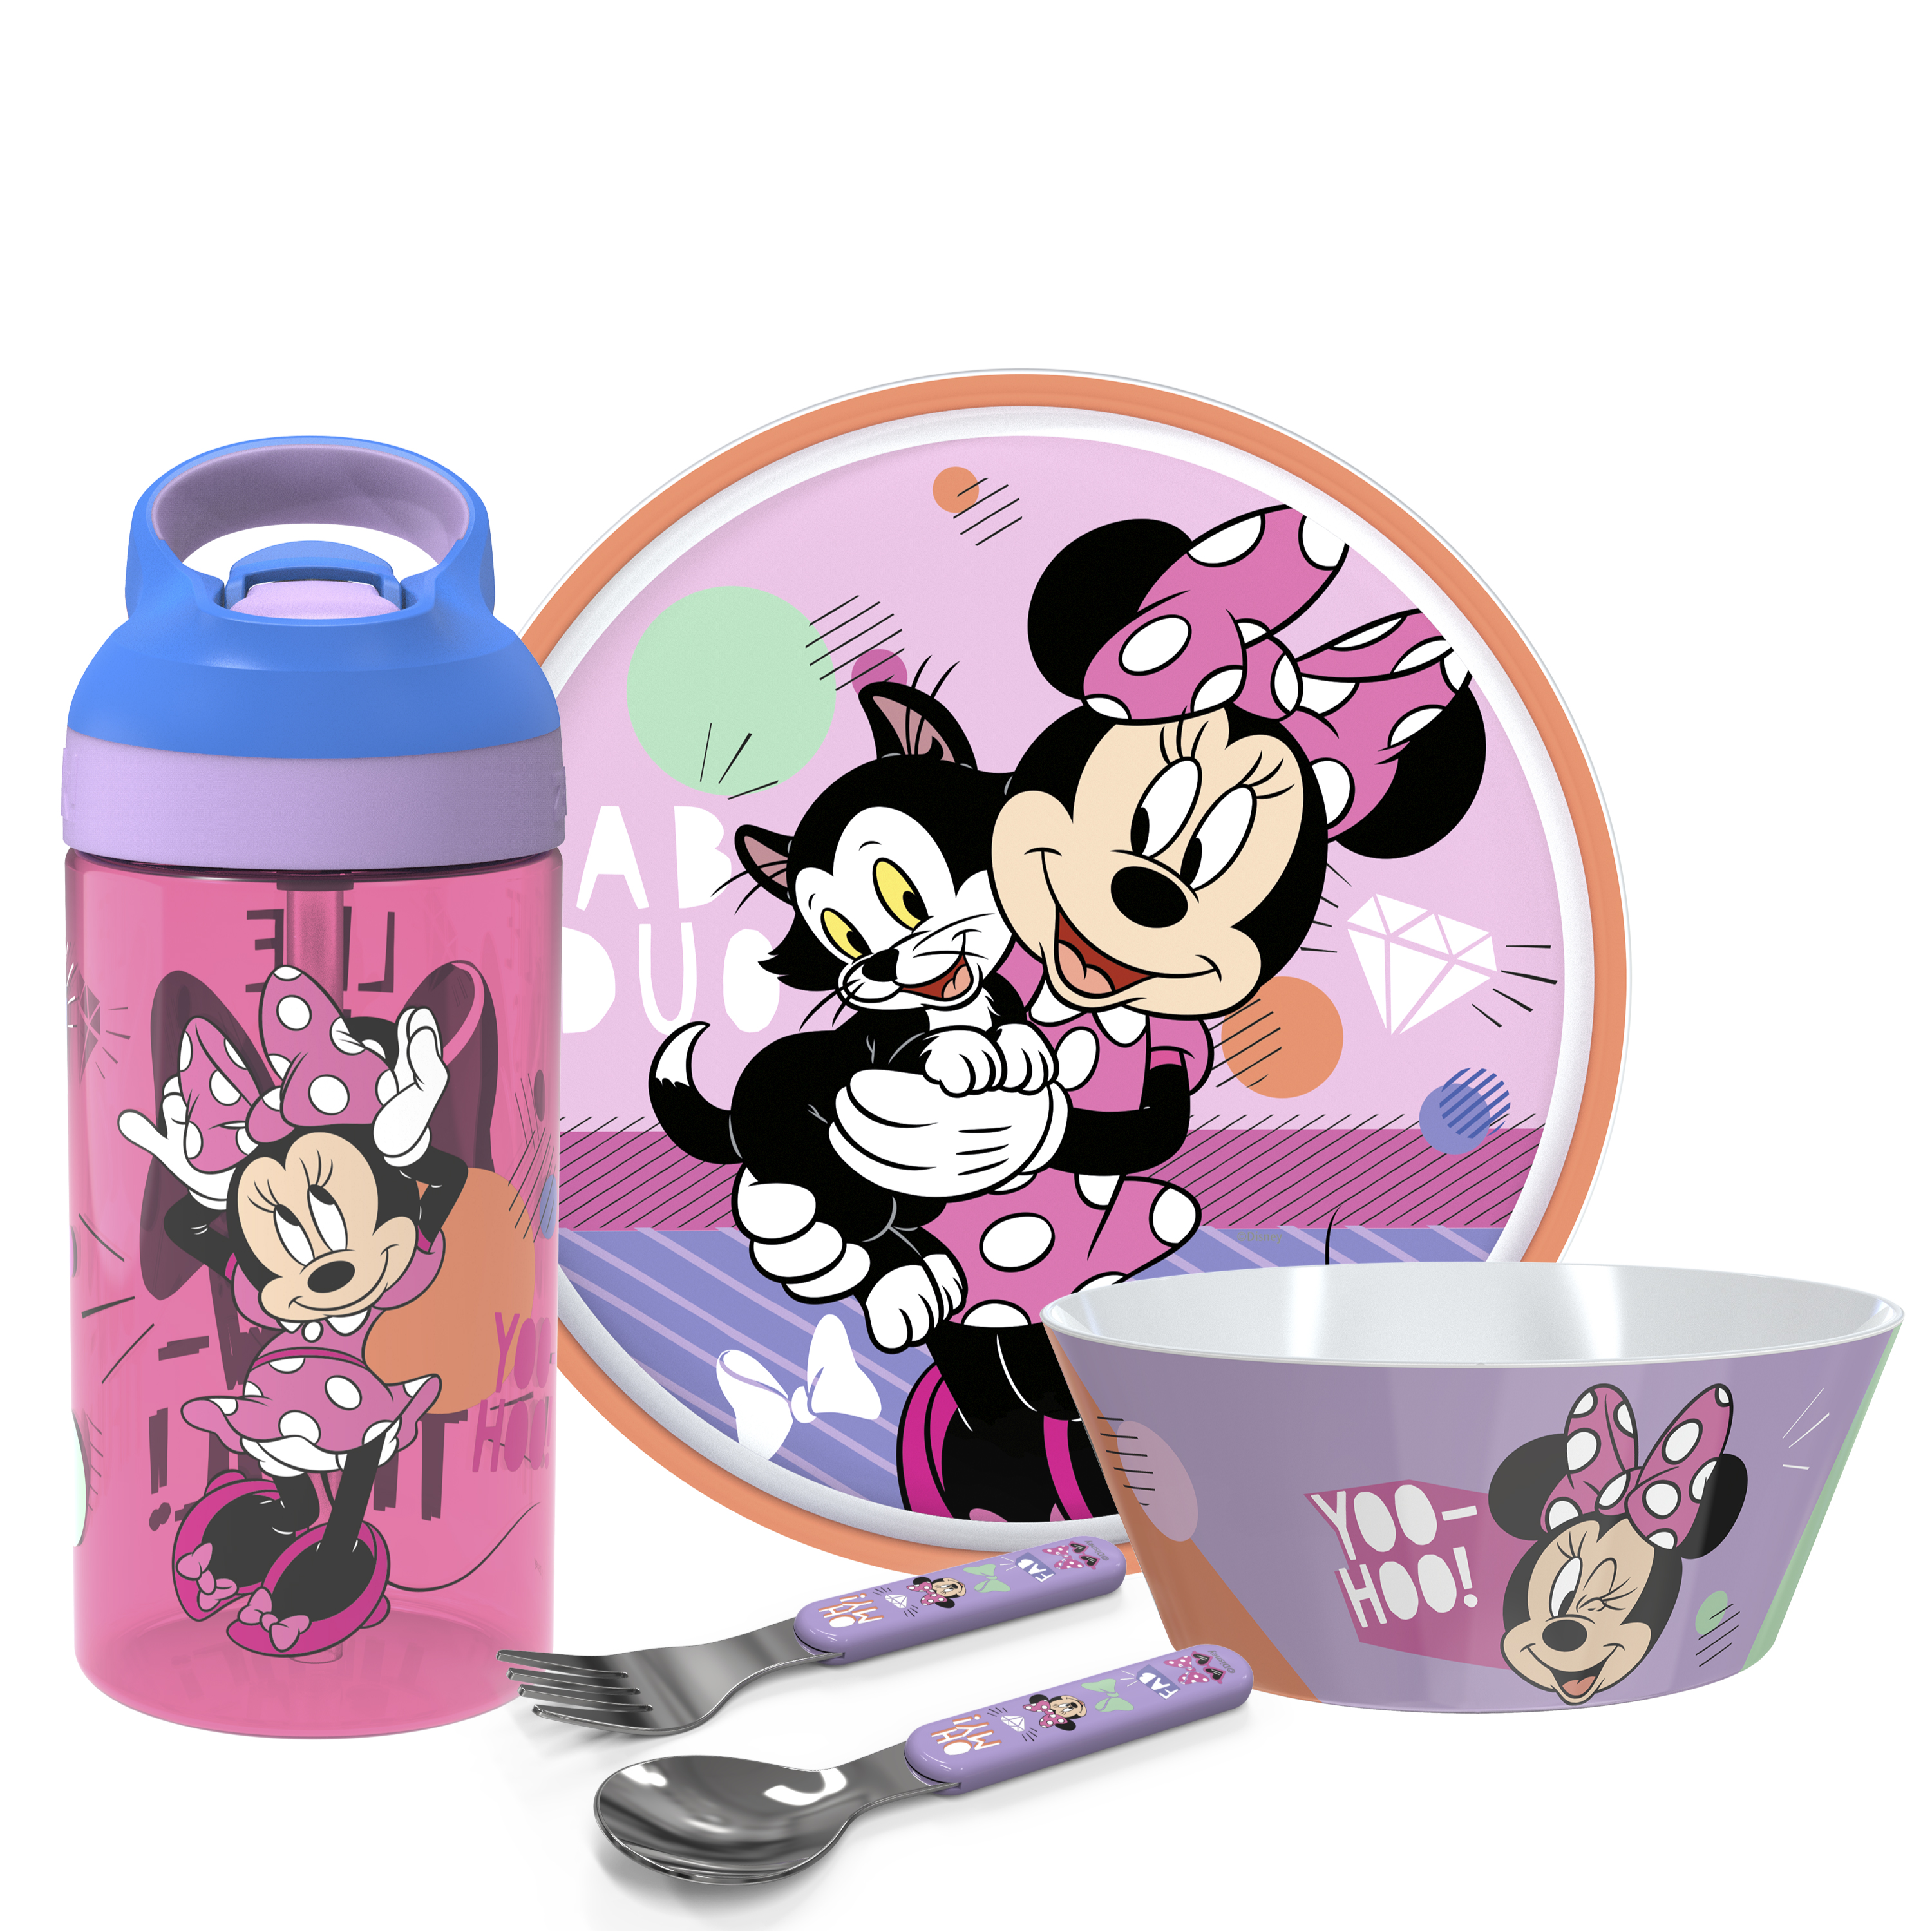 Disney Dinnerware Set, Minnie Mouse and Friends, 5-piece set slideshow image 1